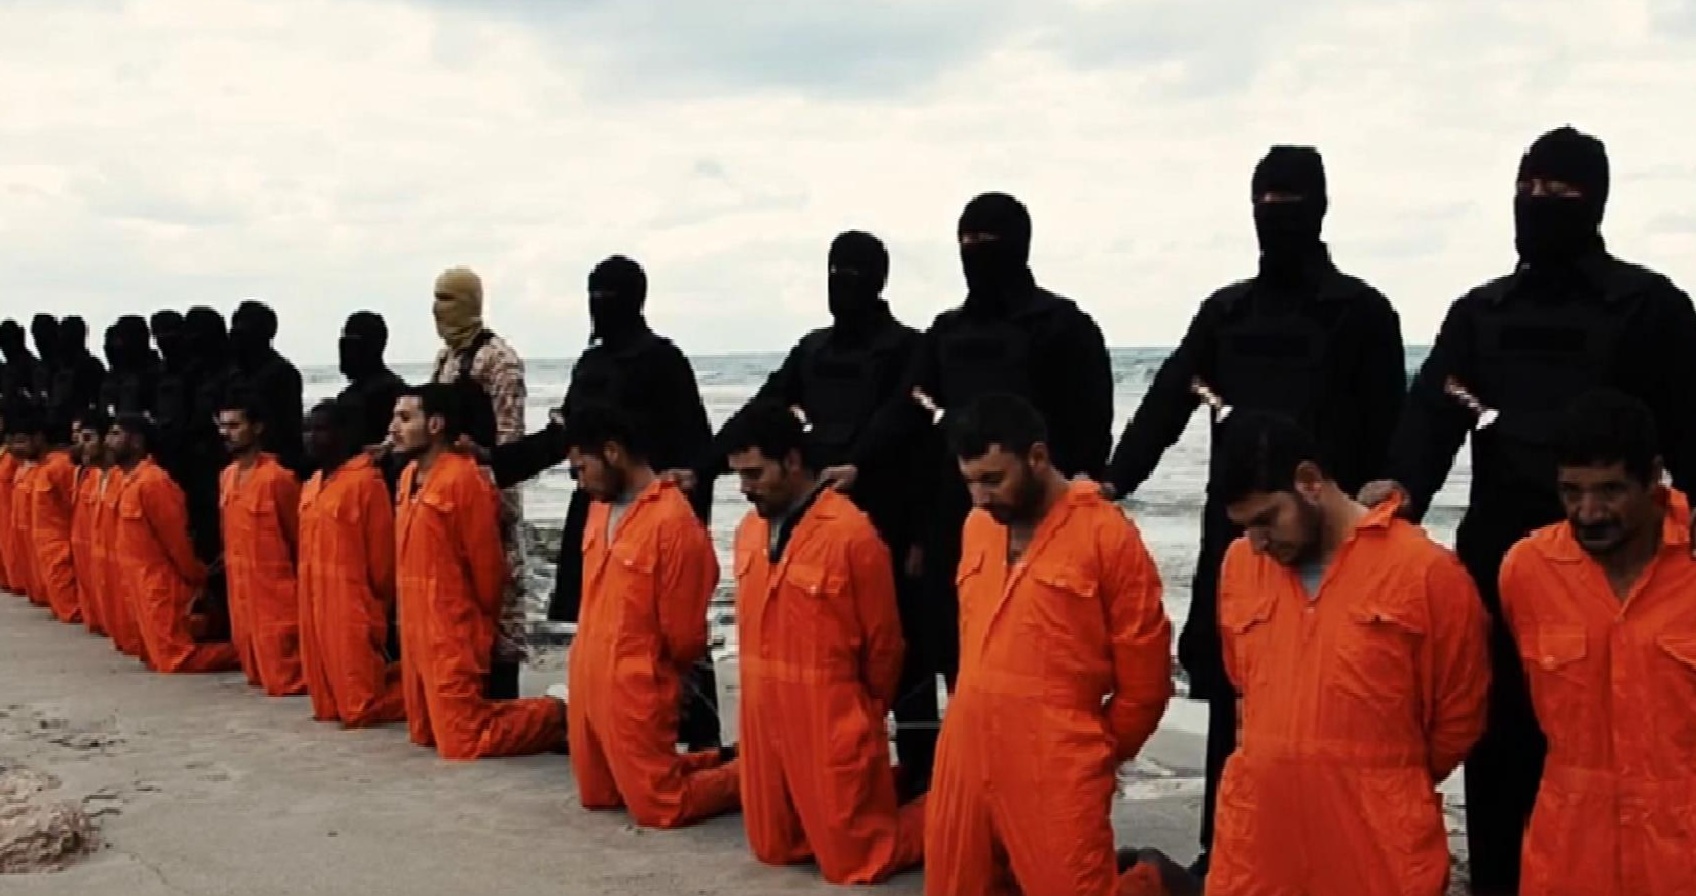 Islamic State shot and beheaded 30 people in Libya